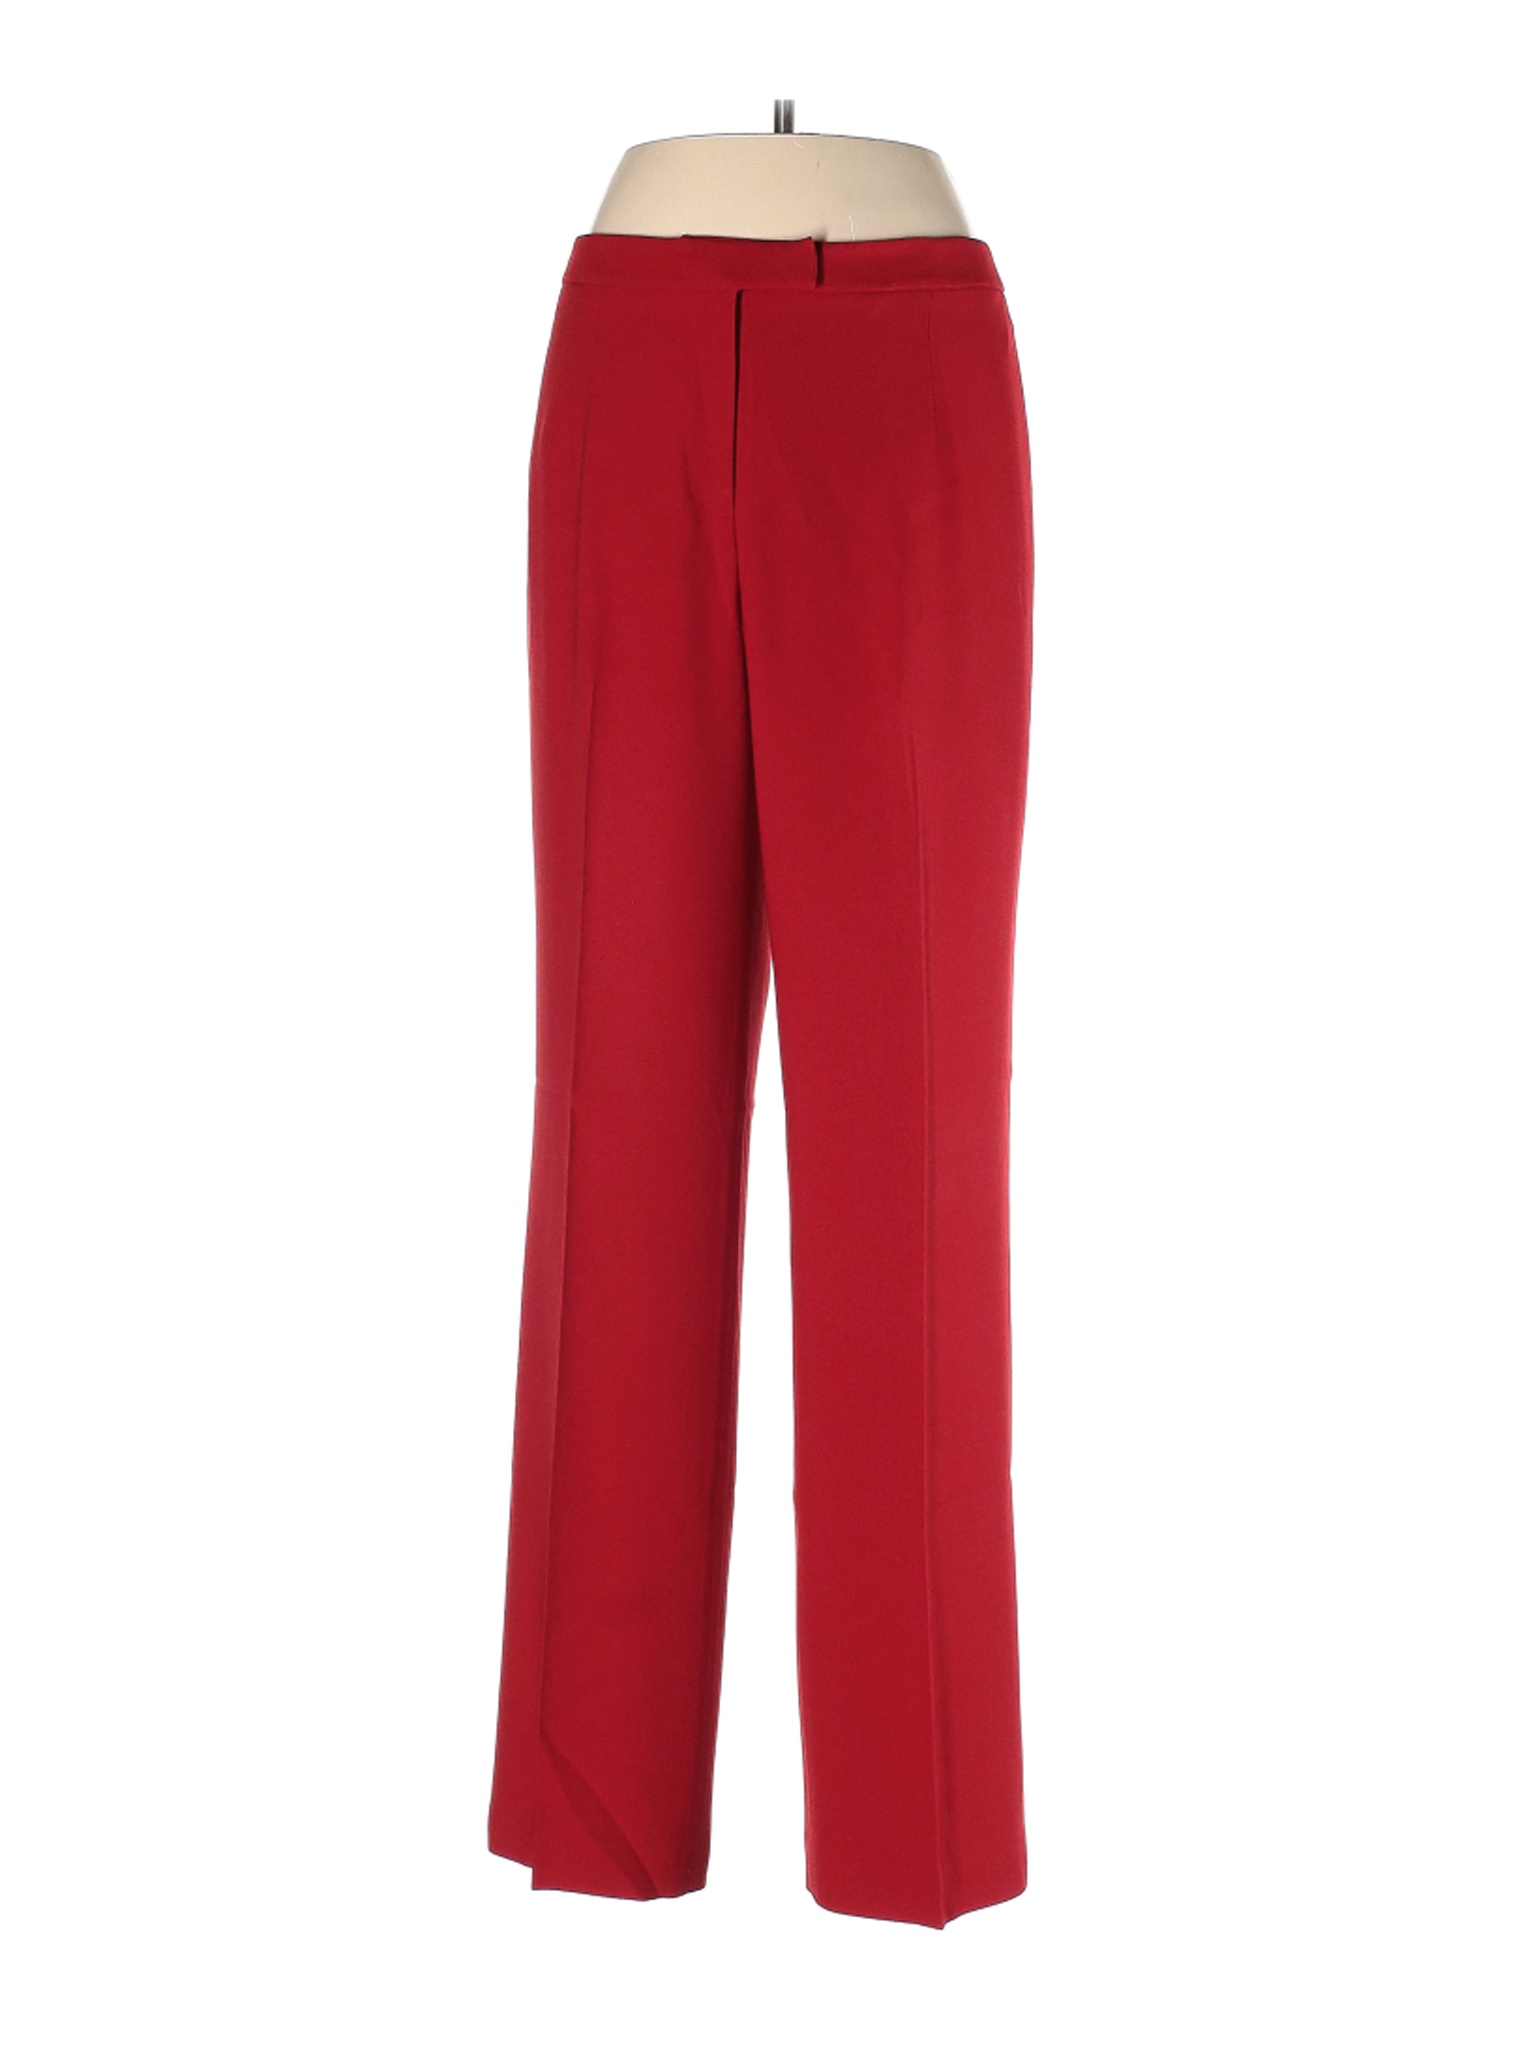 Nygard Collection Women Red Dress Pants 8 | eBay